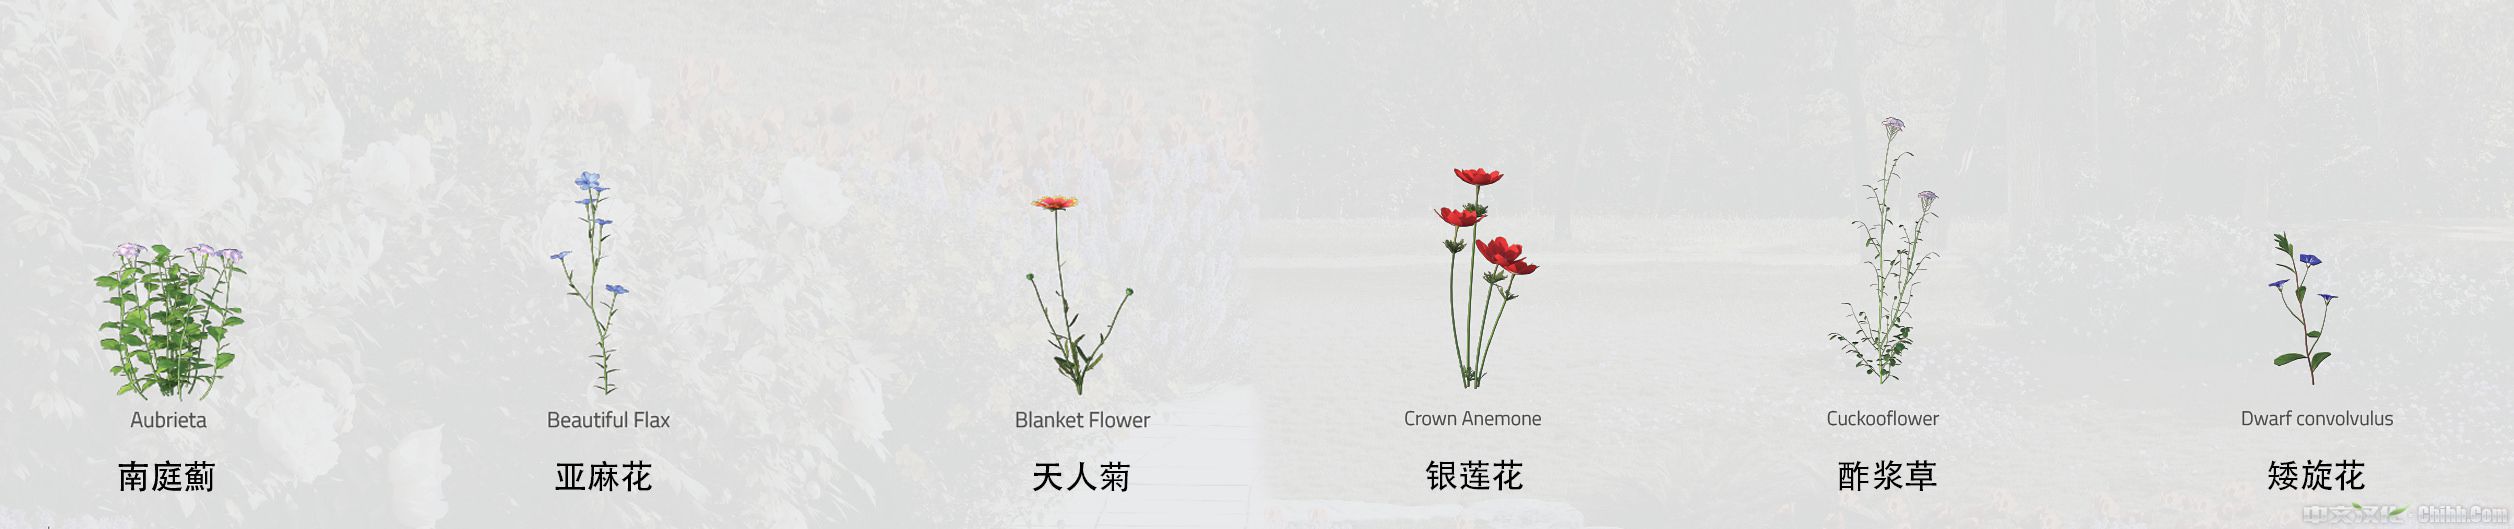 Flower_plant-03.jpg